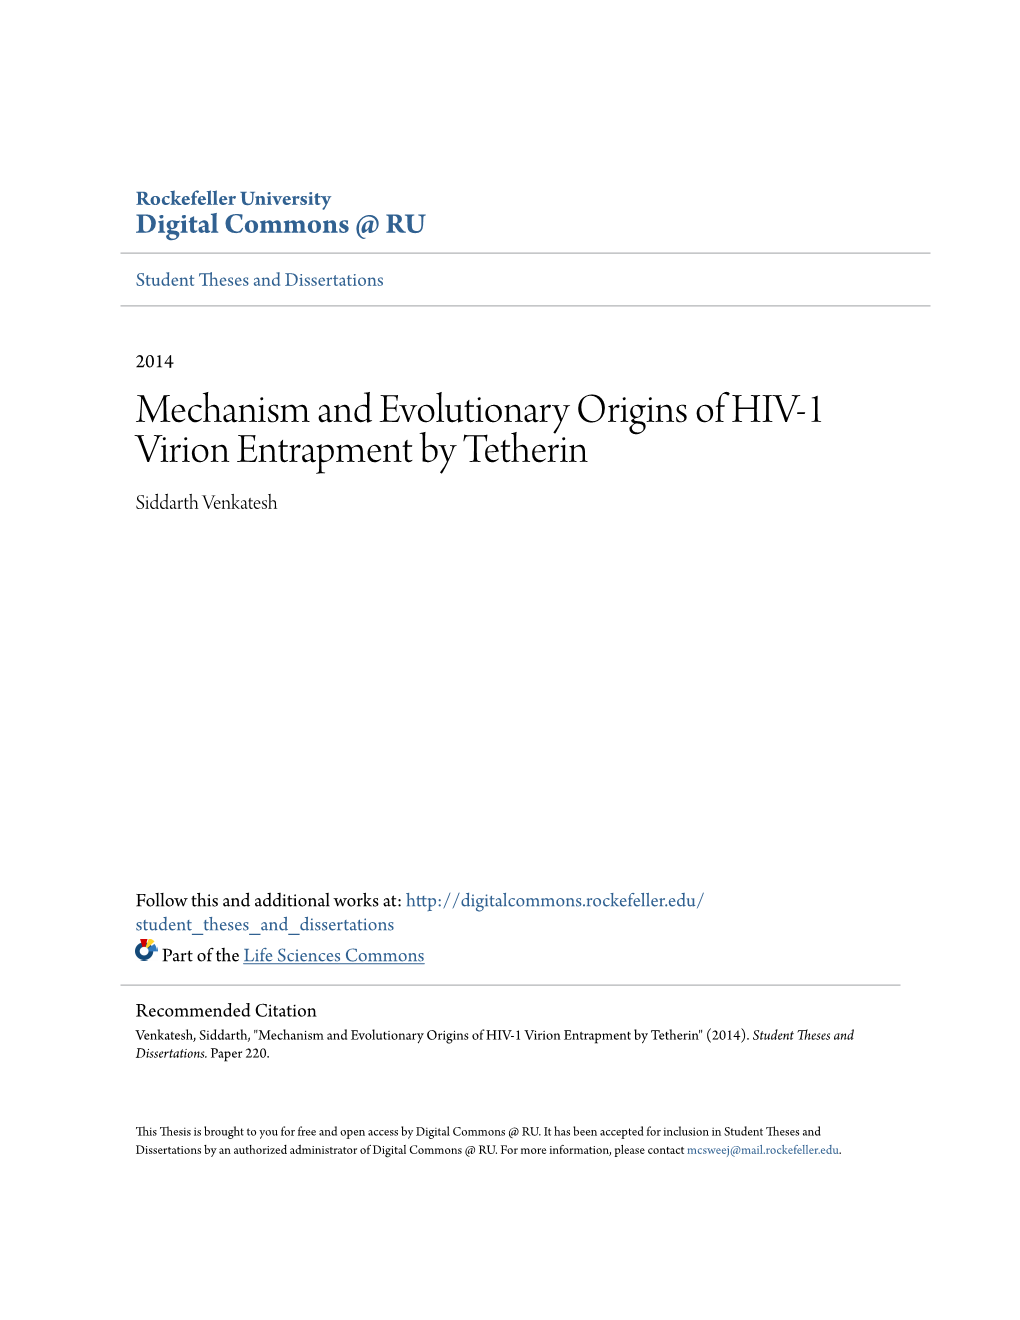 Mechanism and Evolutionary Origins of HIV-1 Virion Entrapment by Tetherin Siddarth Venkatesh